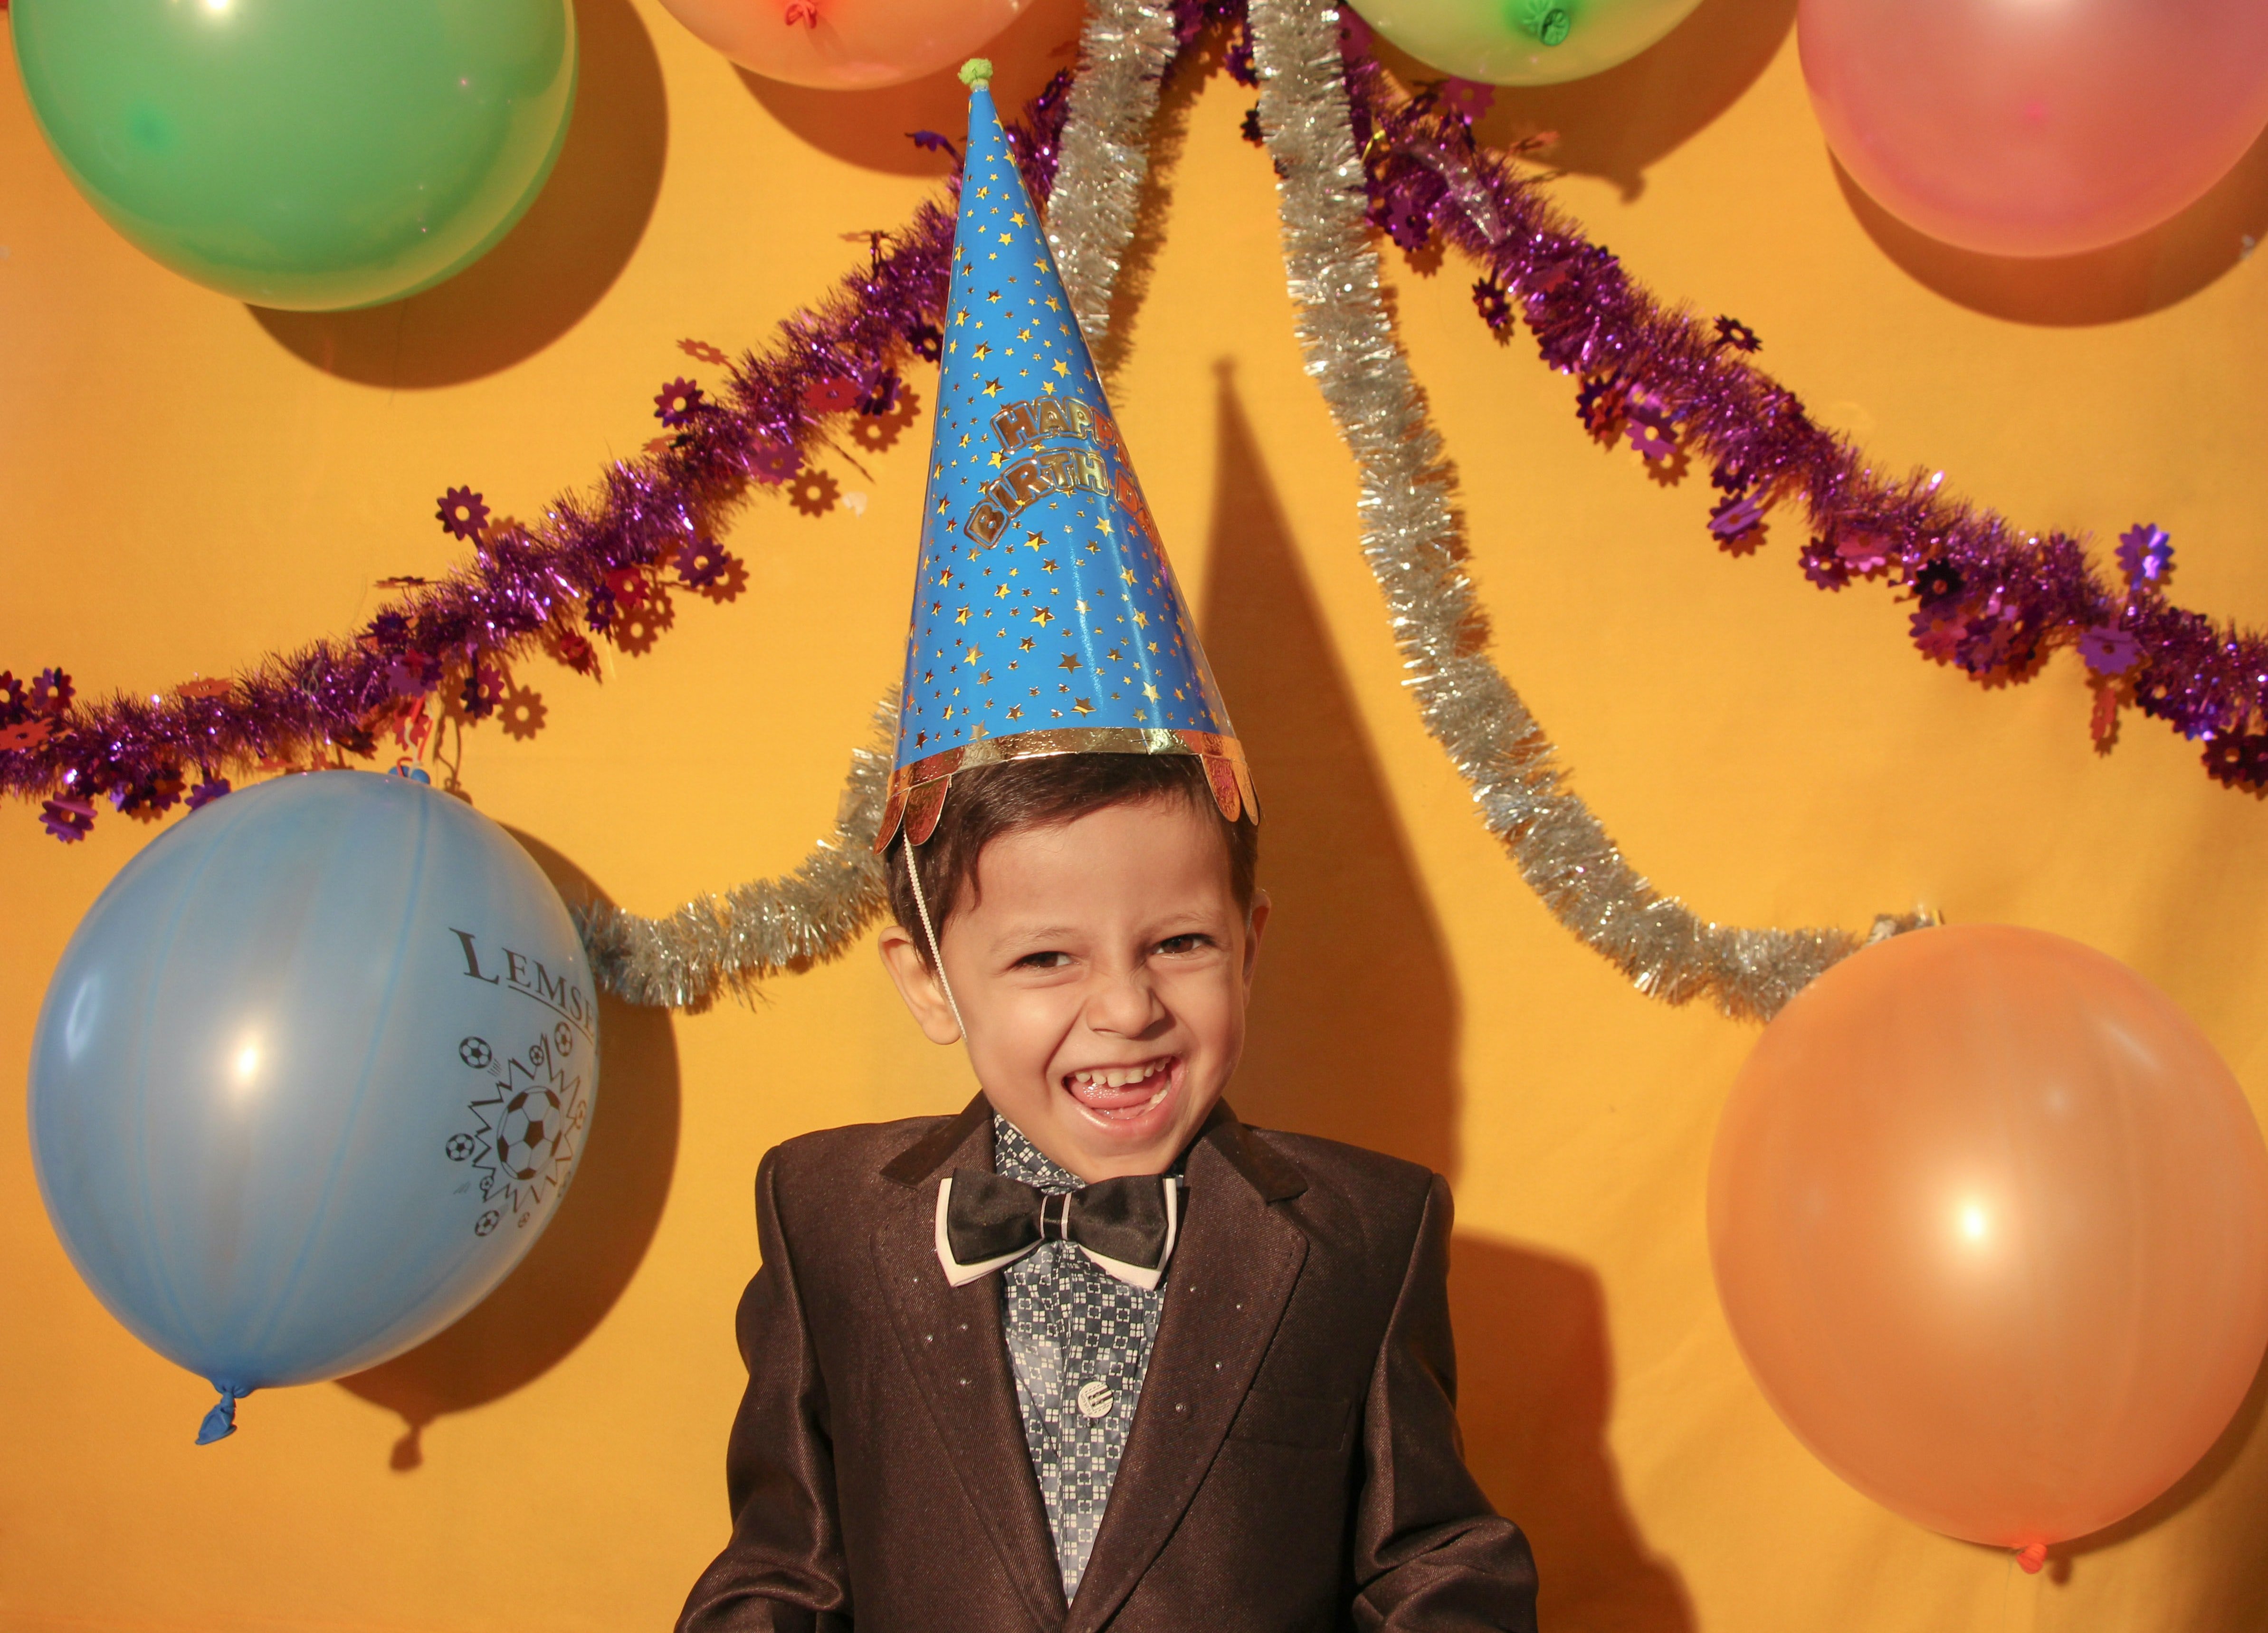 Sam had the best birthday party ever. | Source: Unsplash